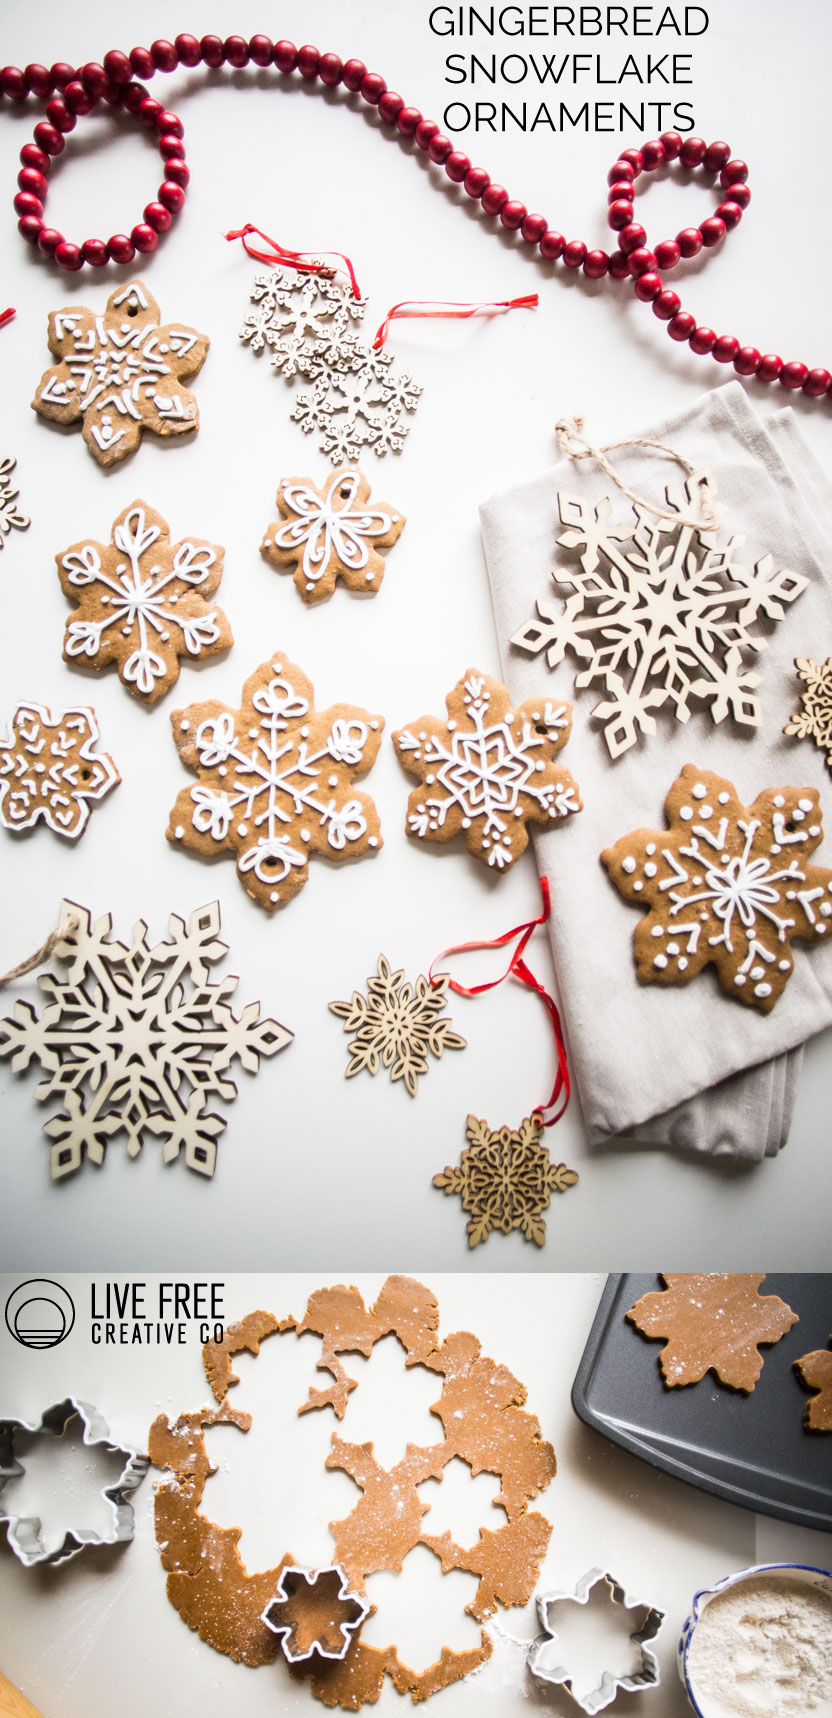 Gingerbread Snowflake Ornaments | Live Free Creative Co